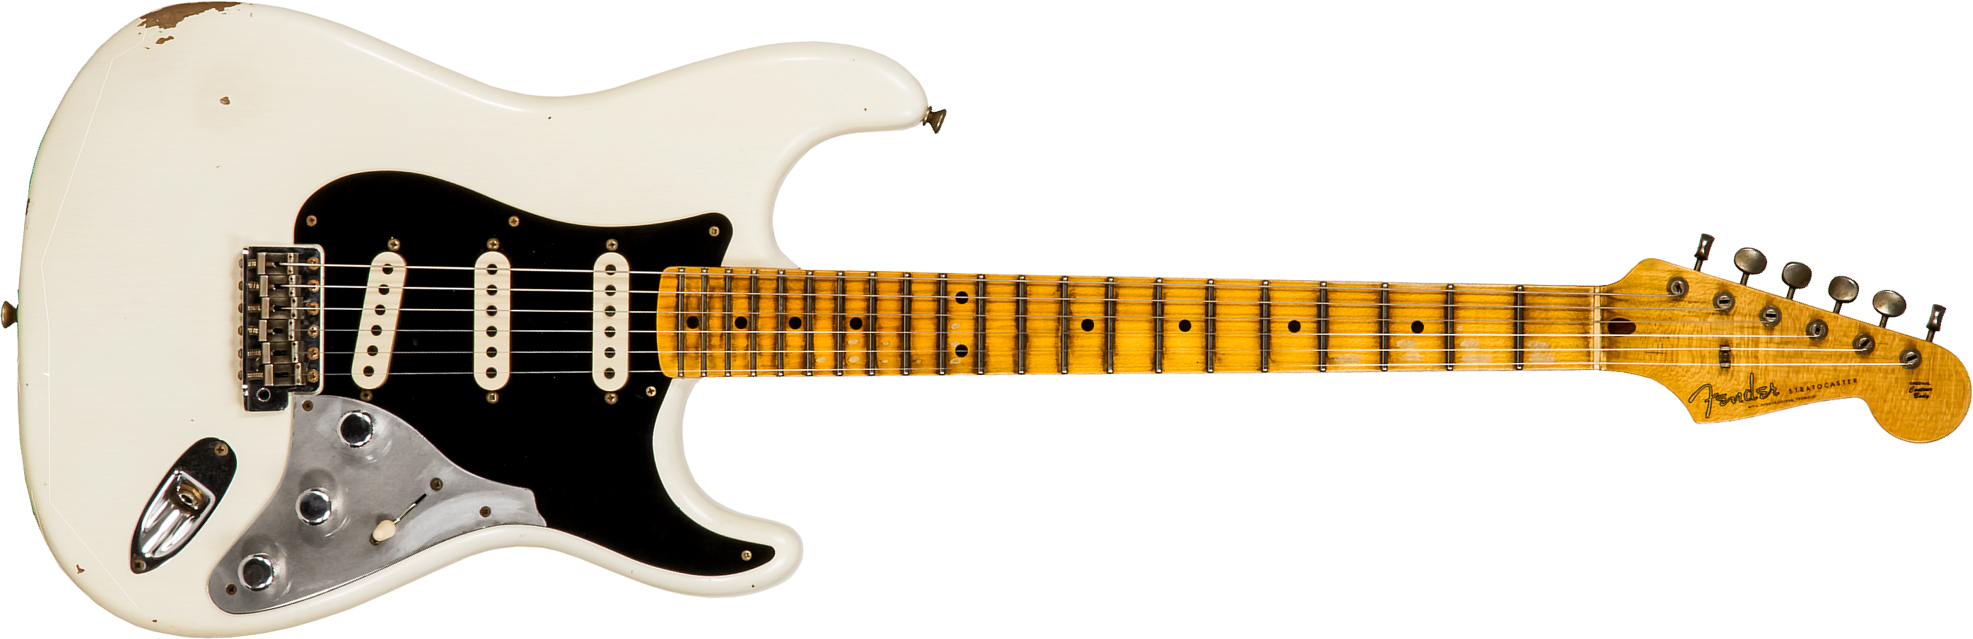 Fender Custom Shop Strat Poblano Ii 3s Trem Mn #cz555378 - Relic Olympic White - Elektrische gitaar in Str-vorm - Main picture